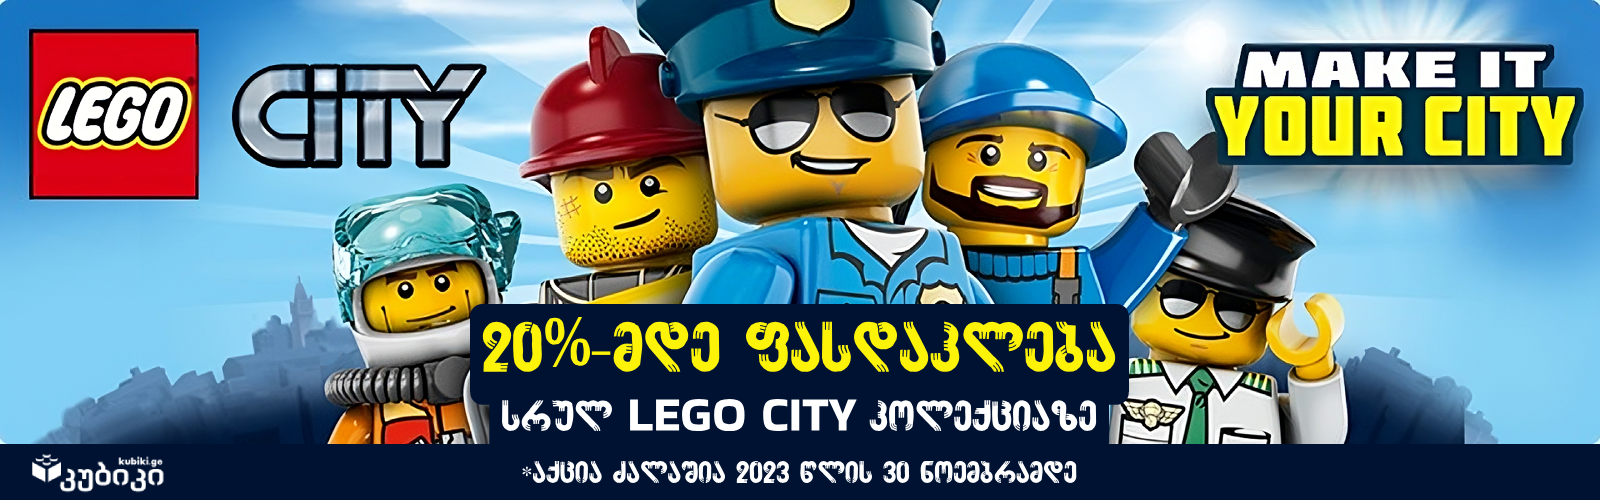 LEGO CITY BANNER transformed 1 1